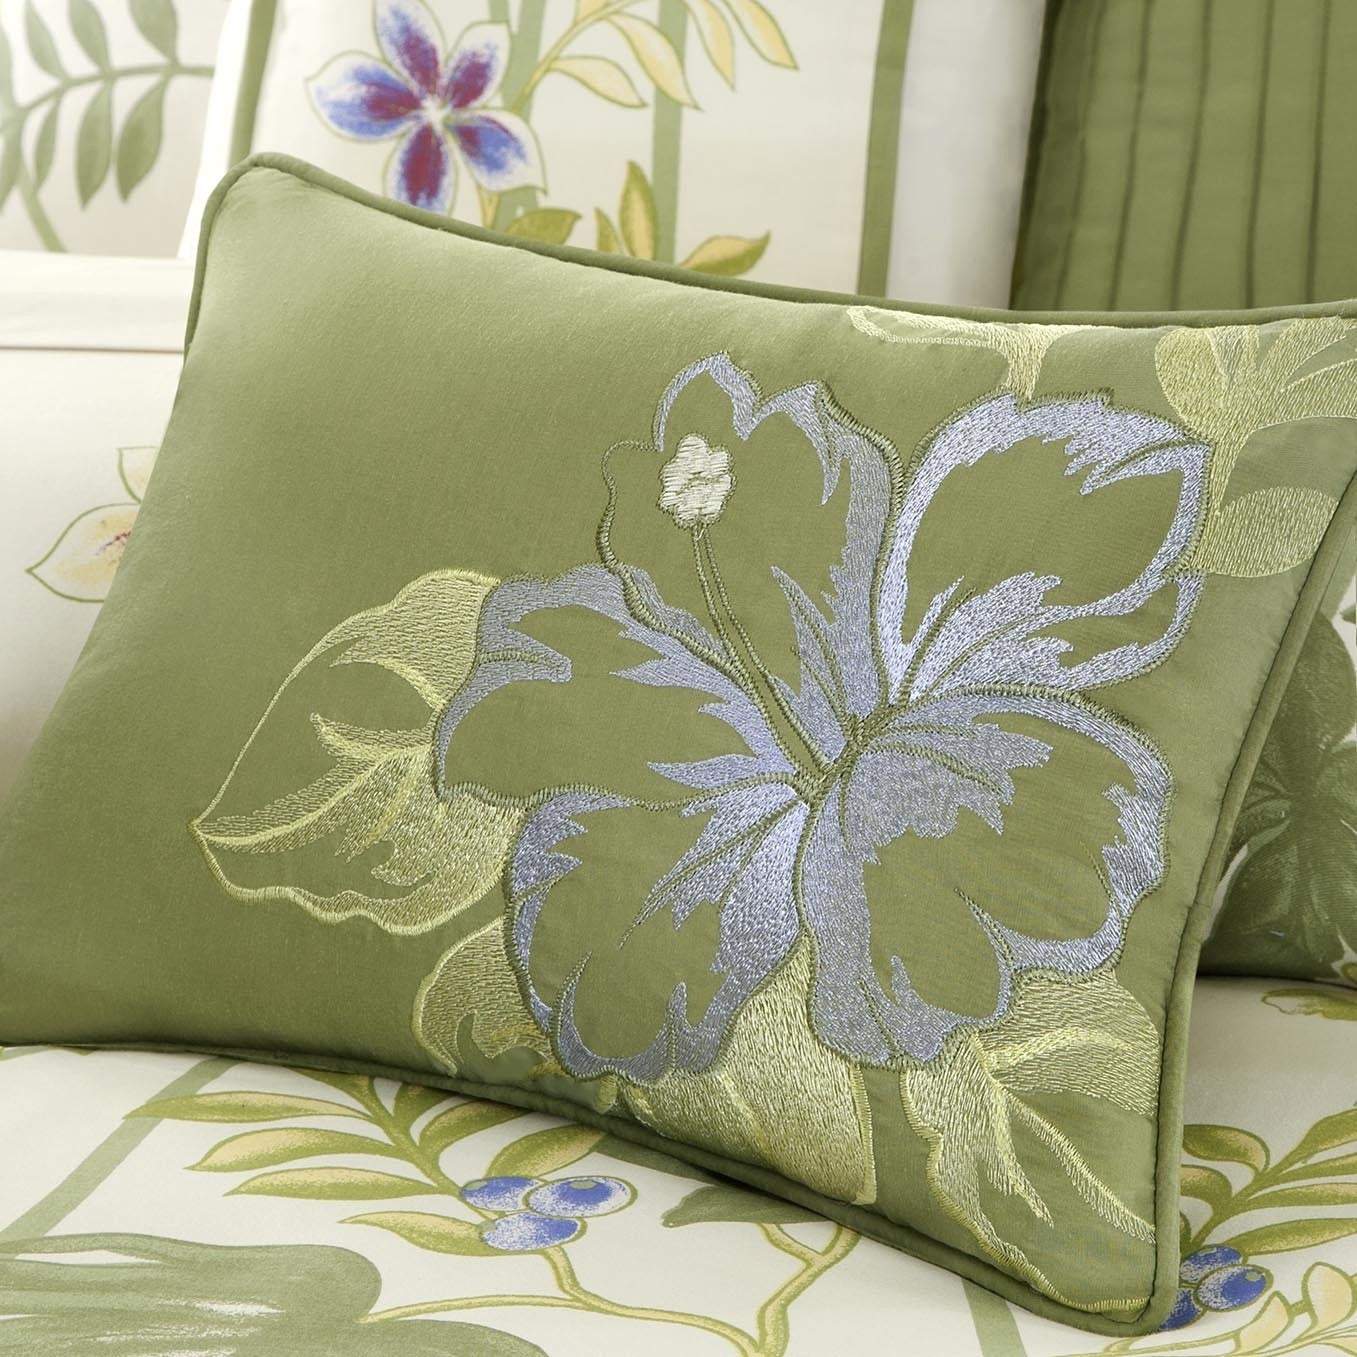 Kannapali Green 7-Piece Comforter Set Comforter Sets By Olliix/JLA HOME (E & E Co., Ltd)